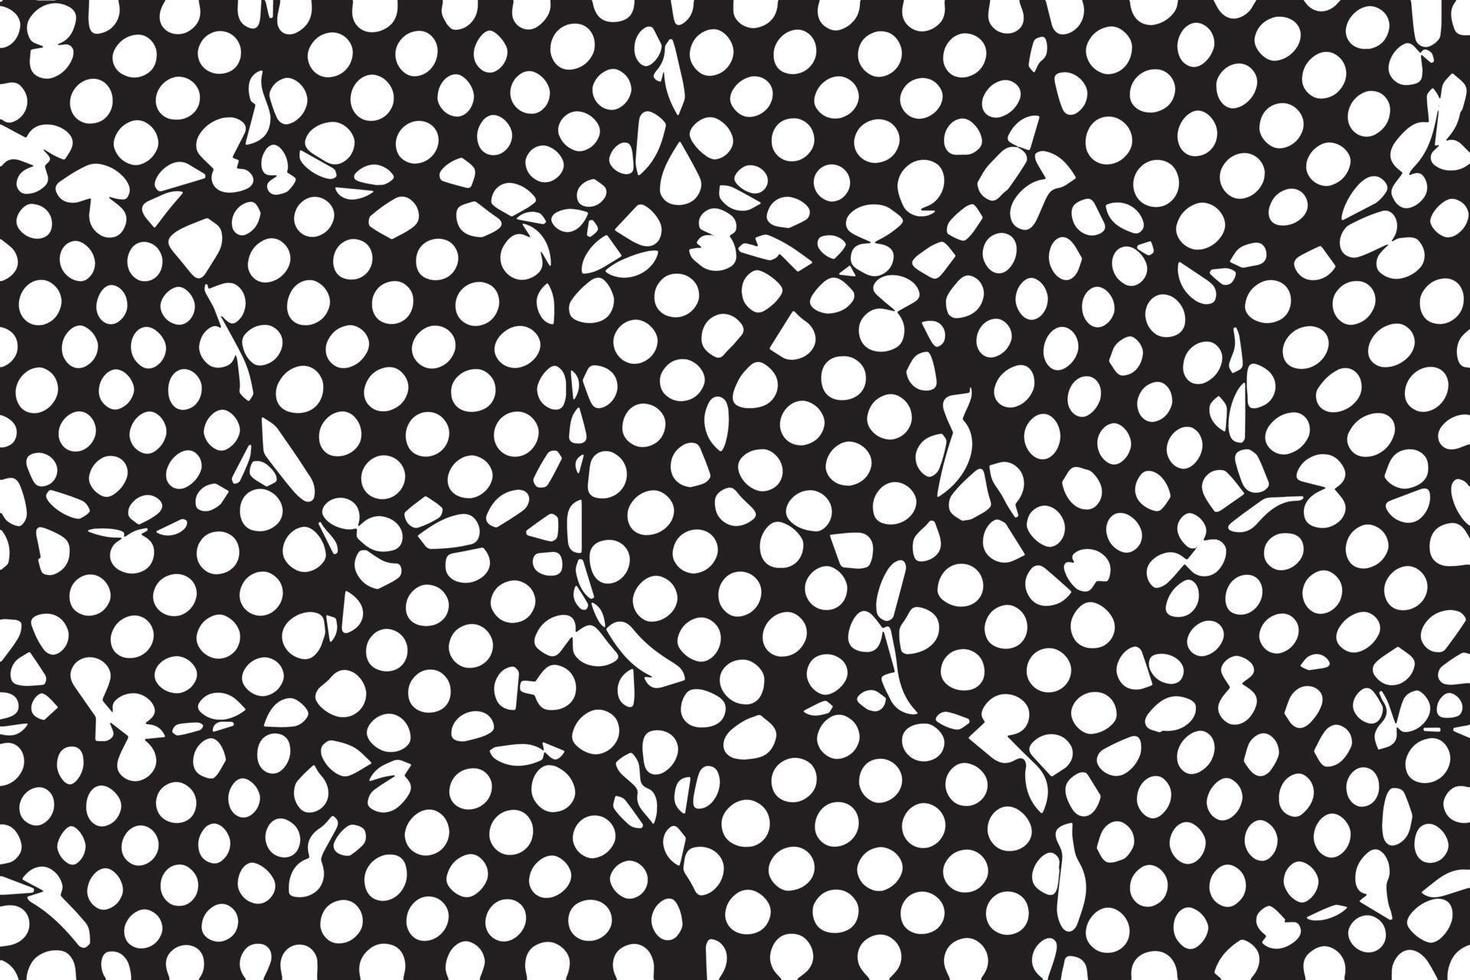 klassiek zwart en wit polka punt patroon vector